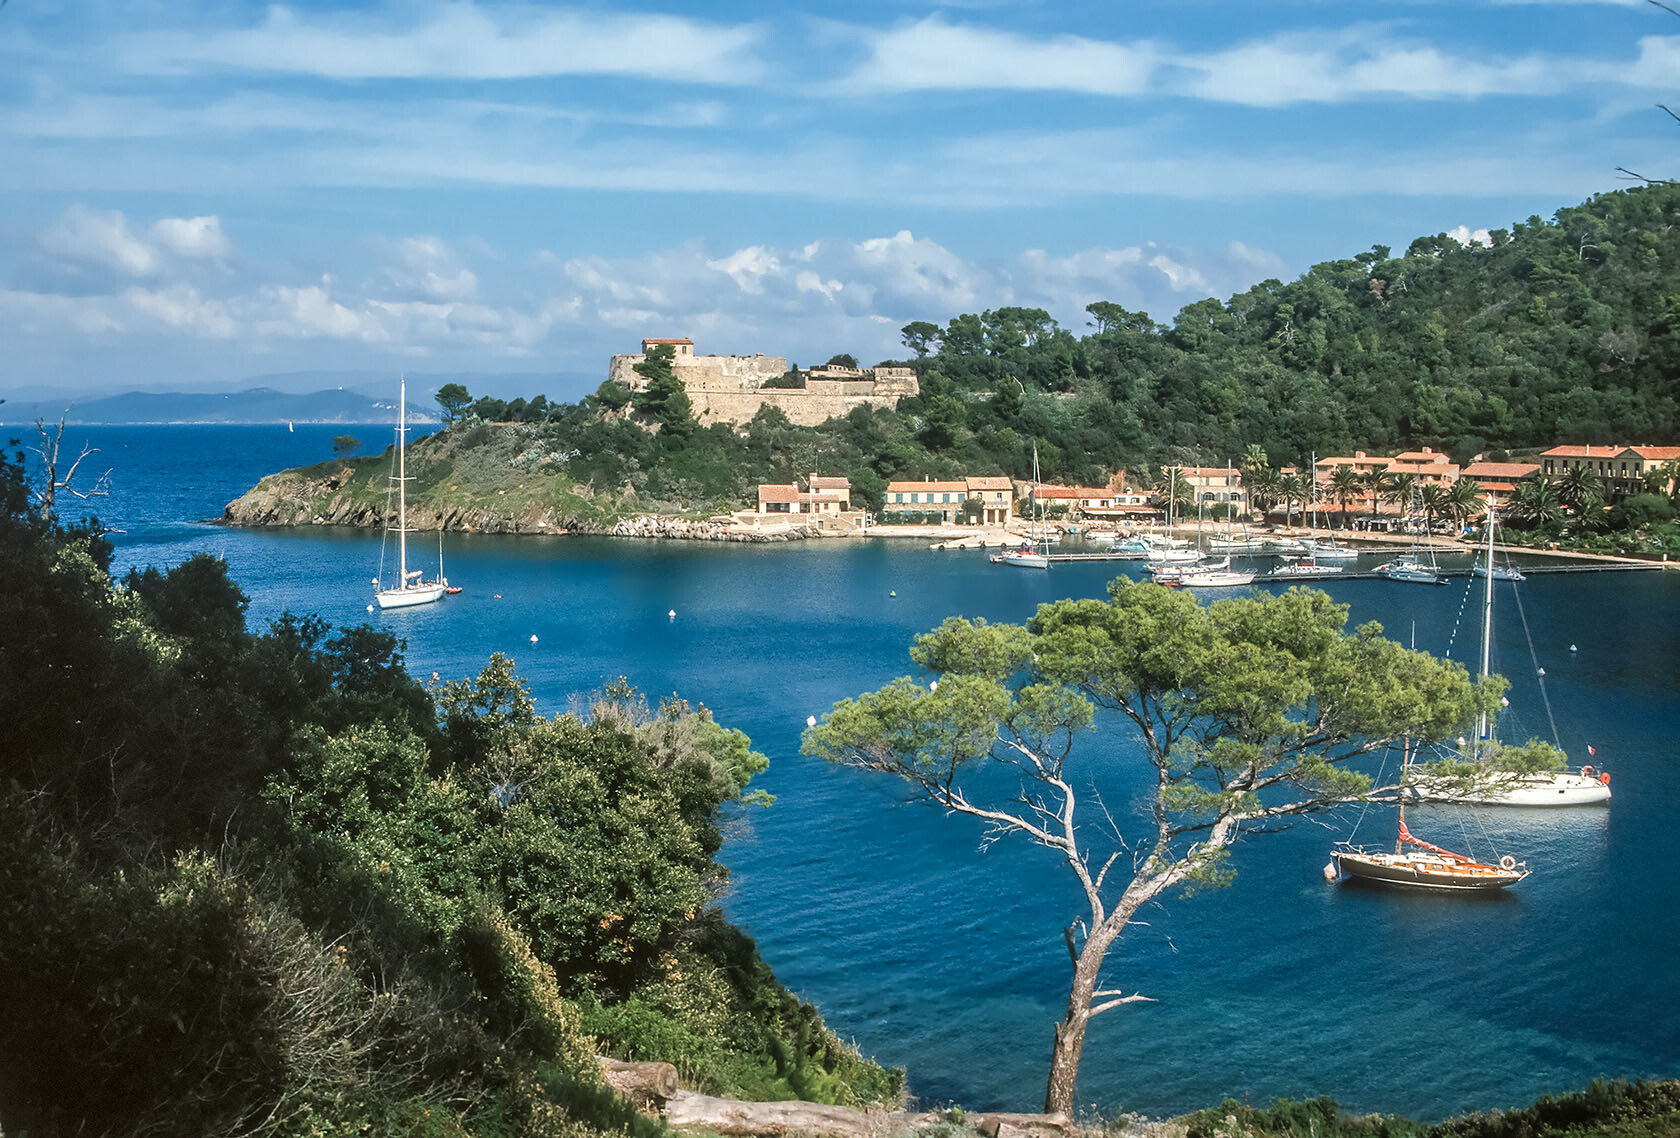 French Riviera SamBoat Rentals